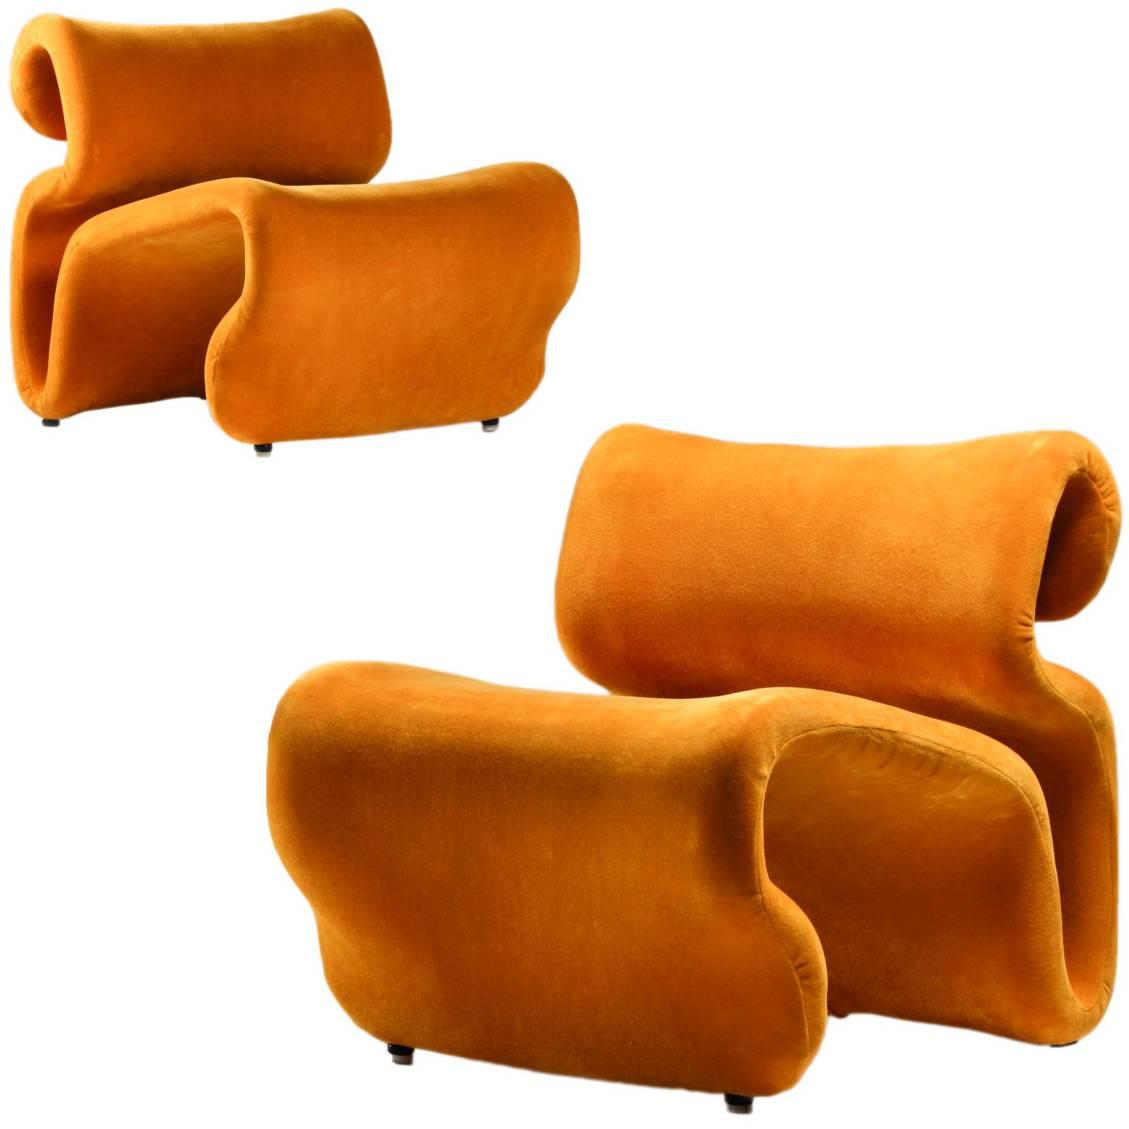 1970s Scandinavian Mustard Yellow Lounge Chairs "Et Cetera" by Jan Ekselius